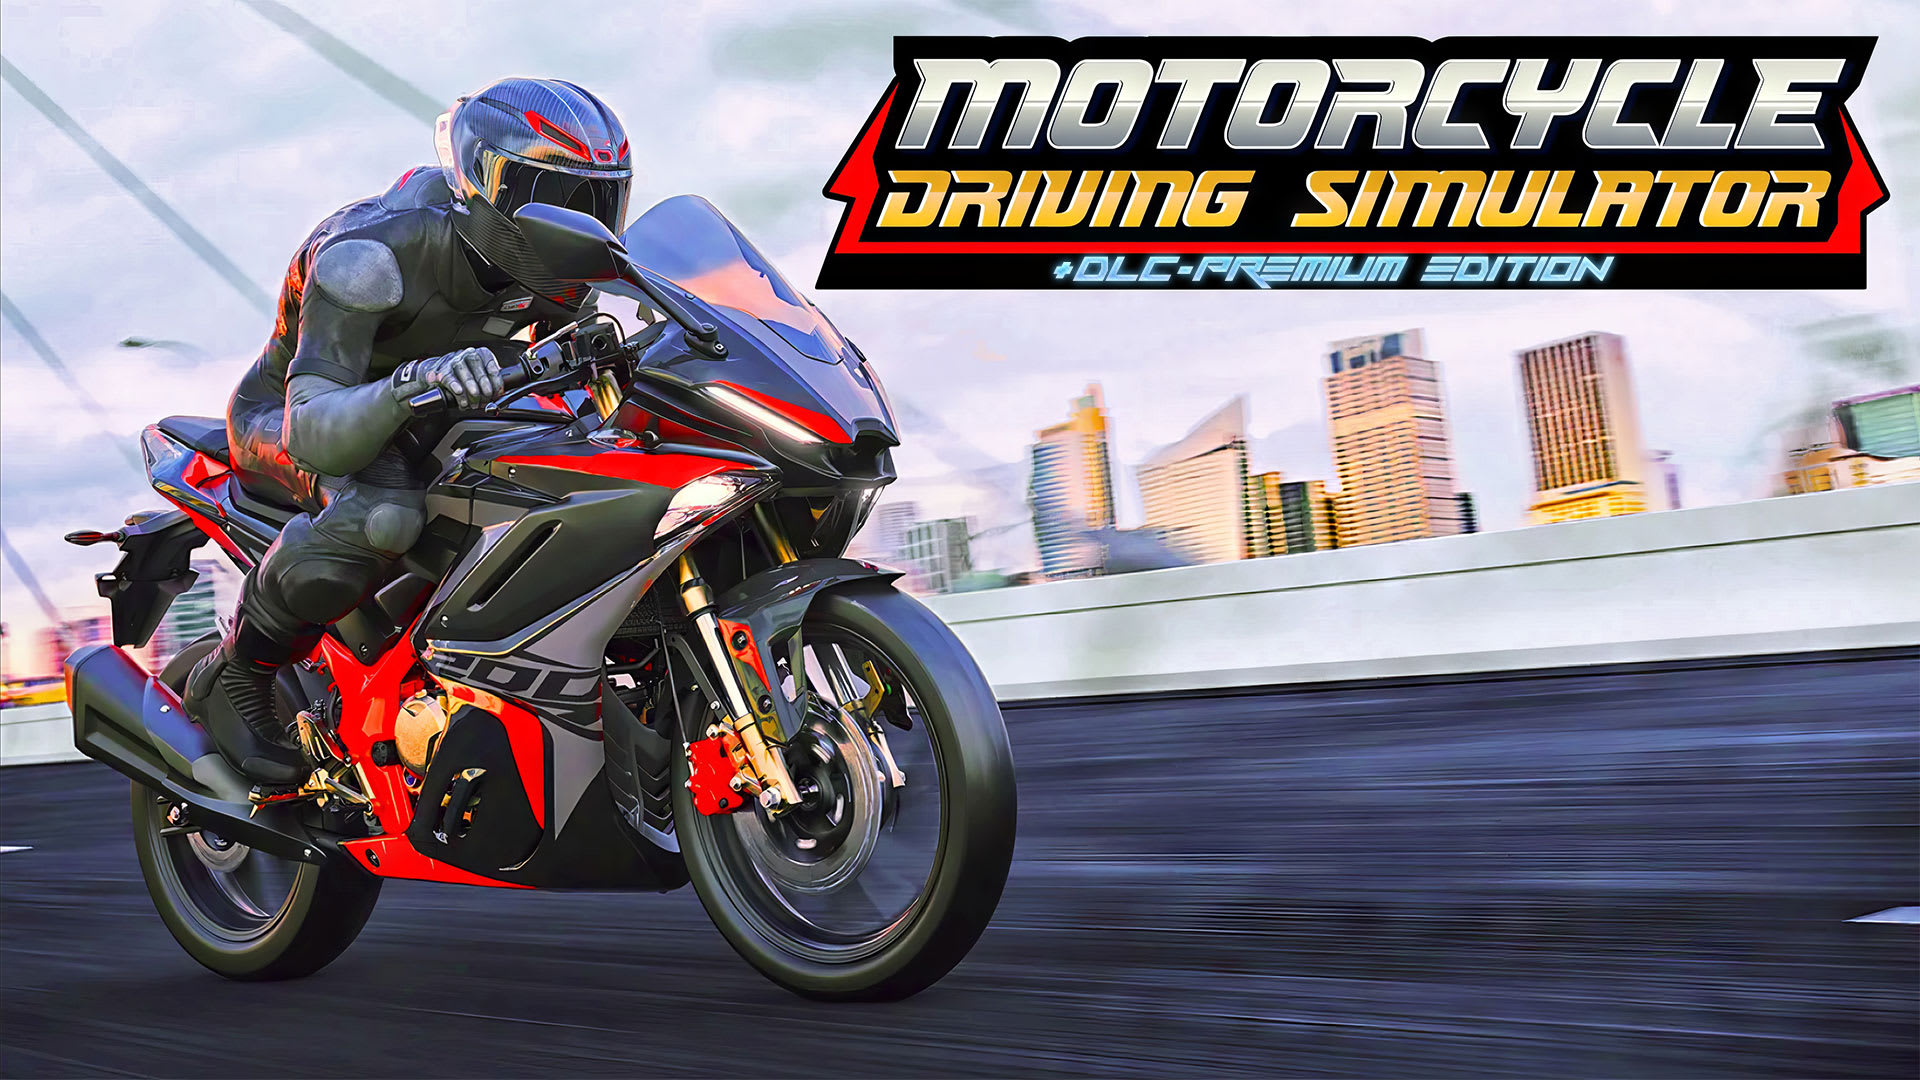 Motorcycle Driving Simulator + DLC - PREMIUM EDITION 1